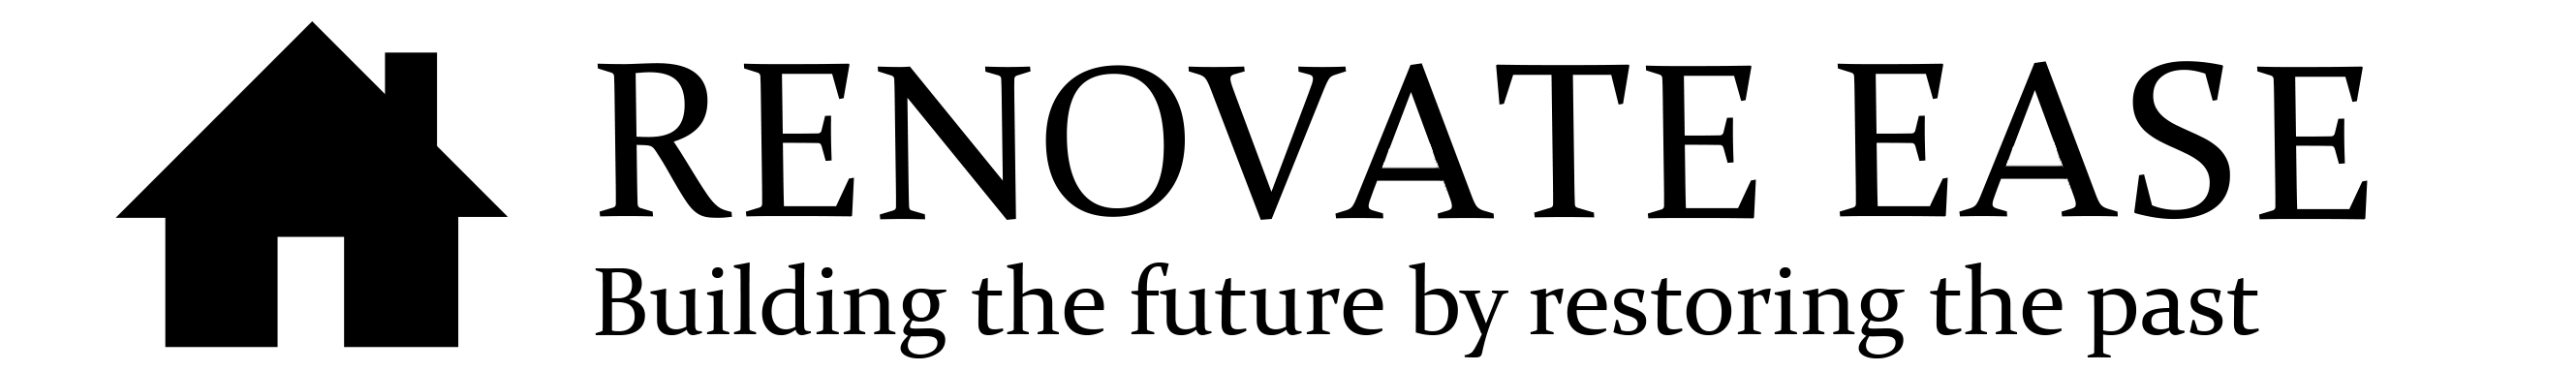 Renovate Ease - Black Logo